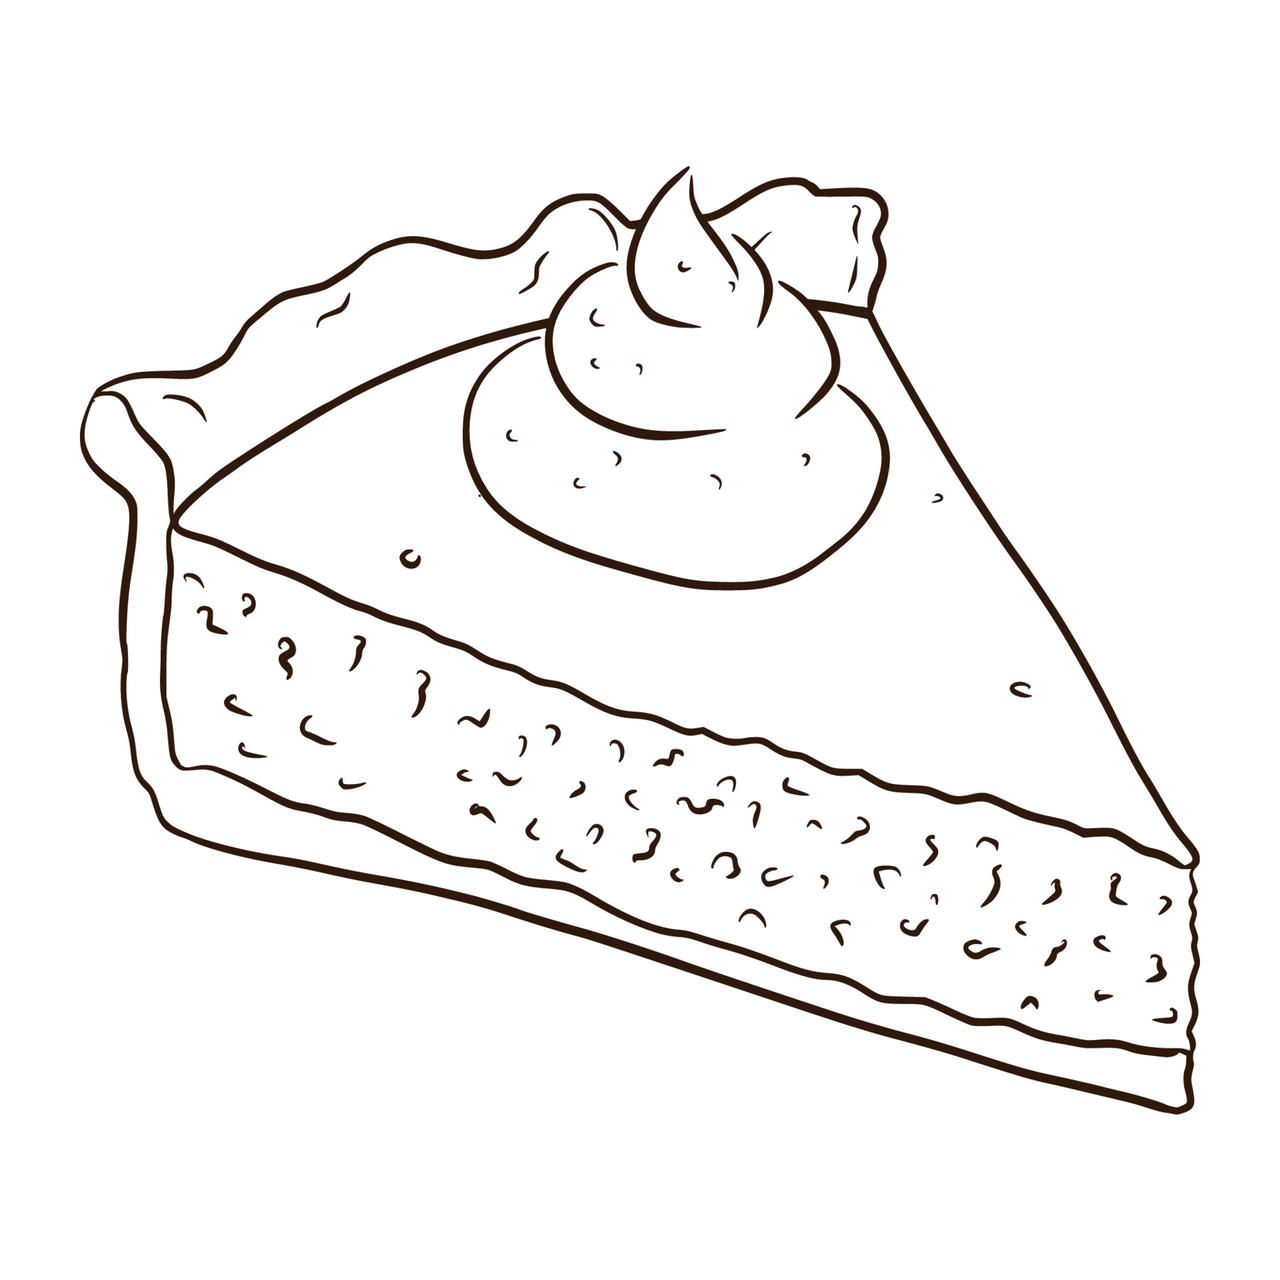 Drawtober pumpkin pie piece illustration by mahomino on